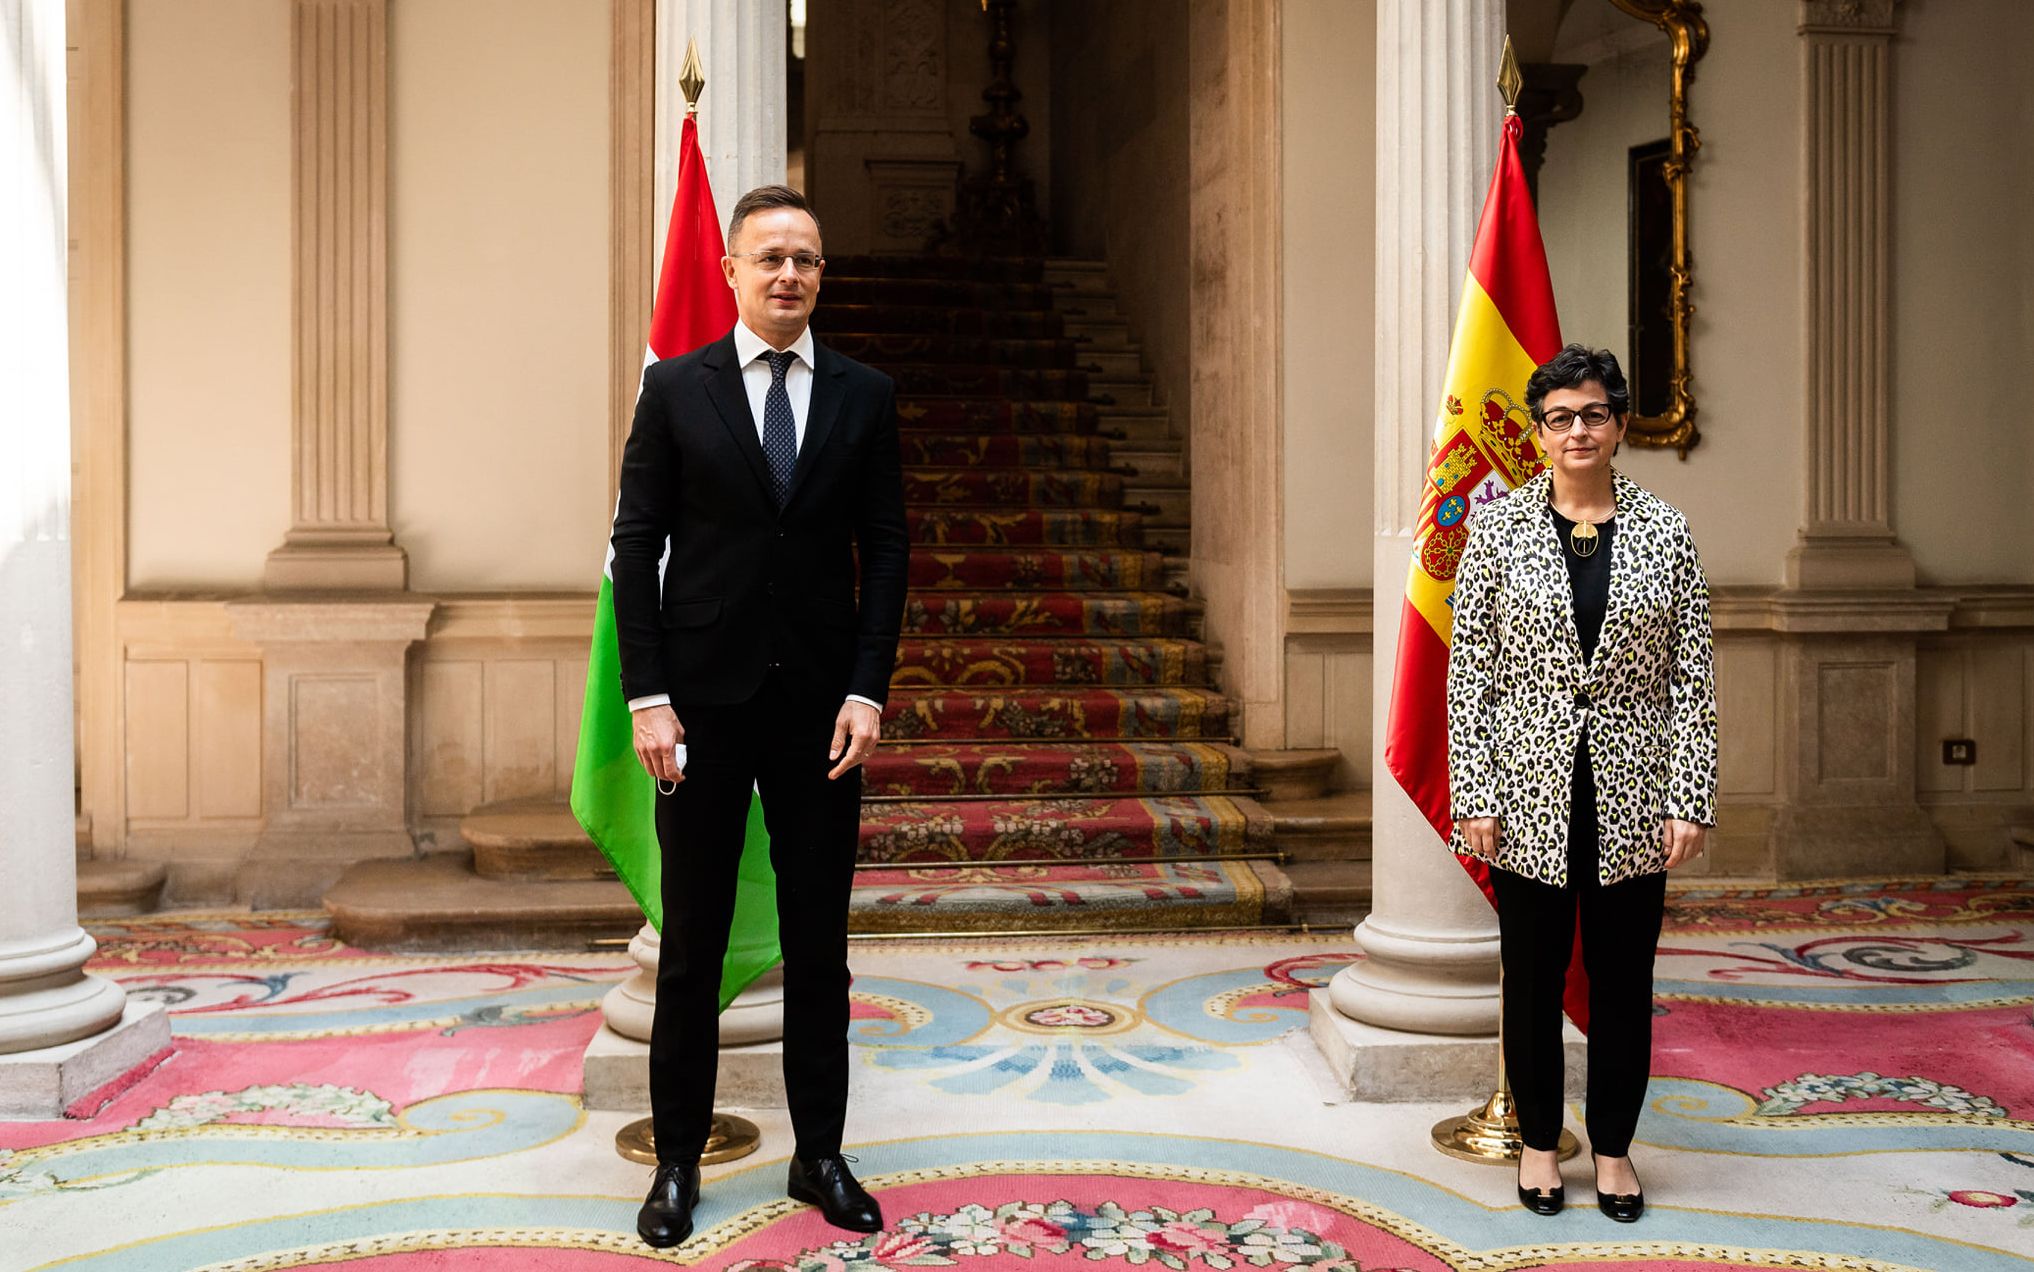 FM Szijjártó Praises Hungary-Spain Cooperation Against People Smuggling